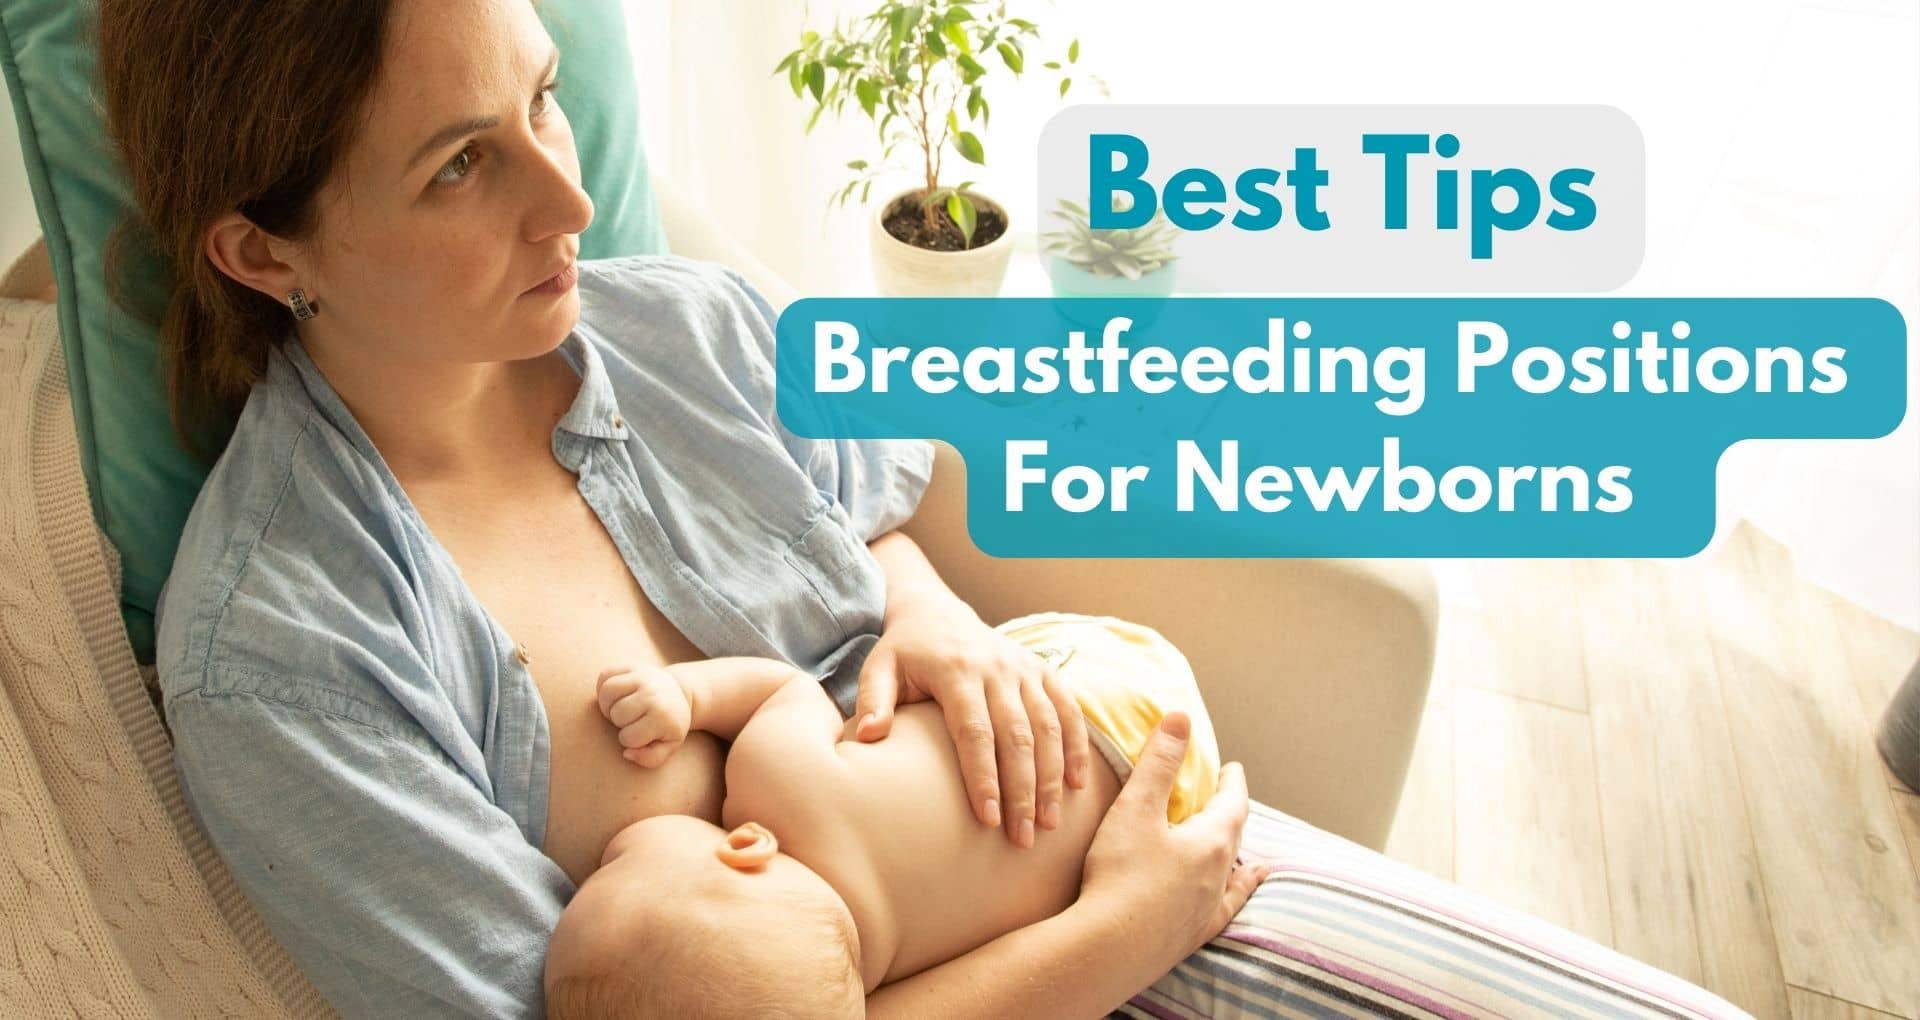 Breastfeeding Positions For Newborns Best Tips